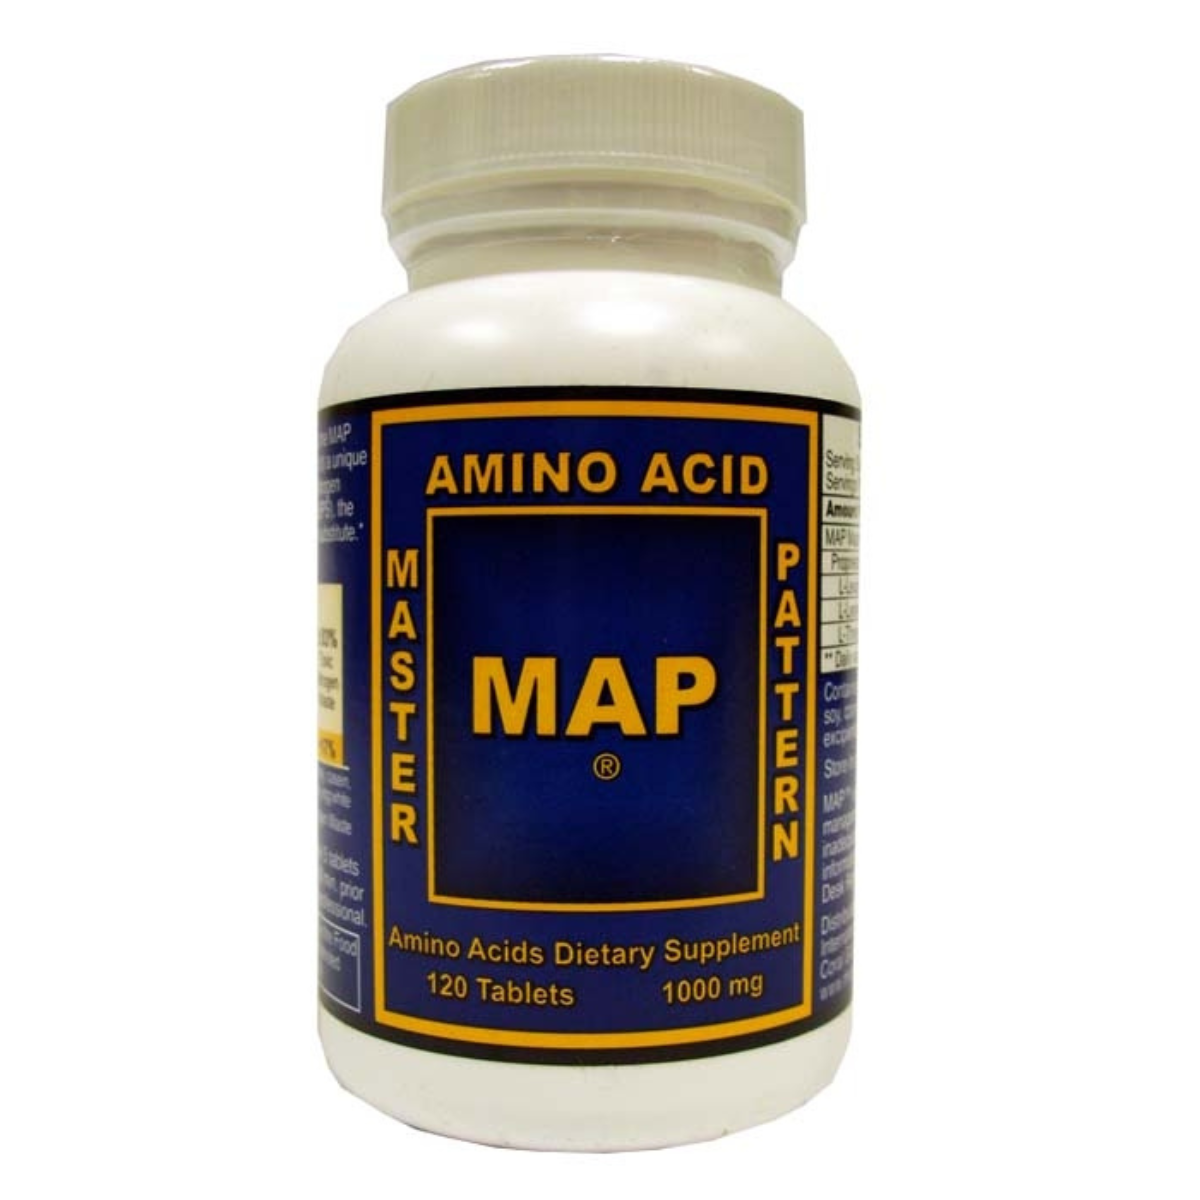 MAP® Master Amino Acid Pattern